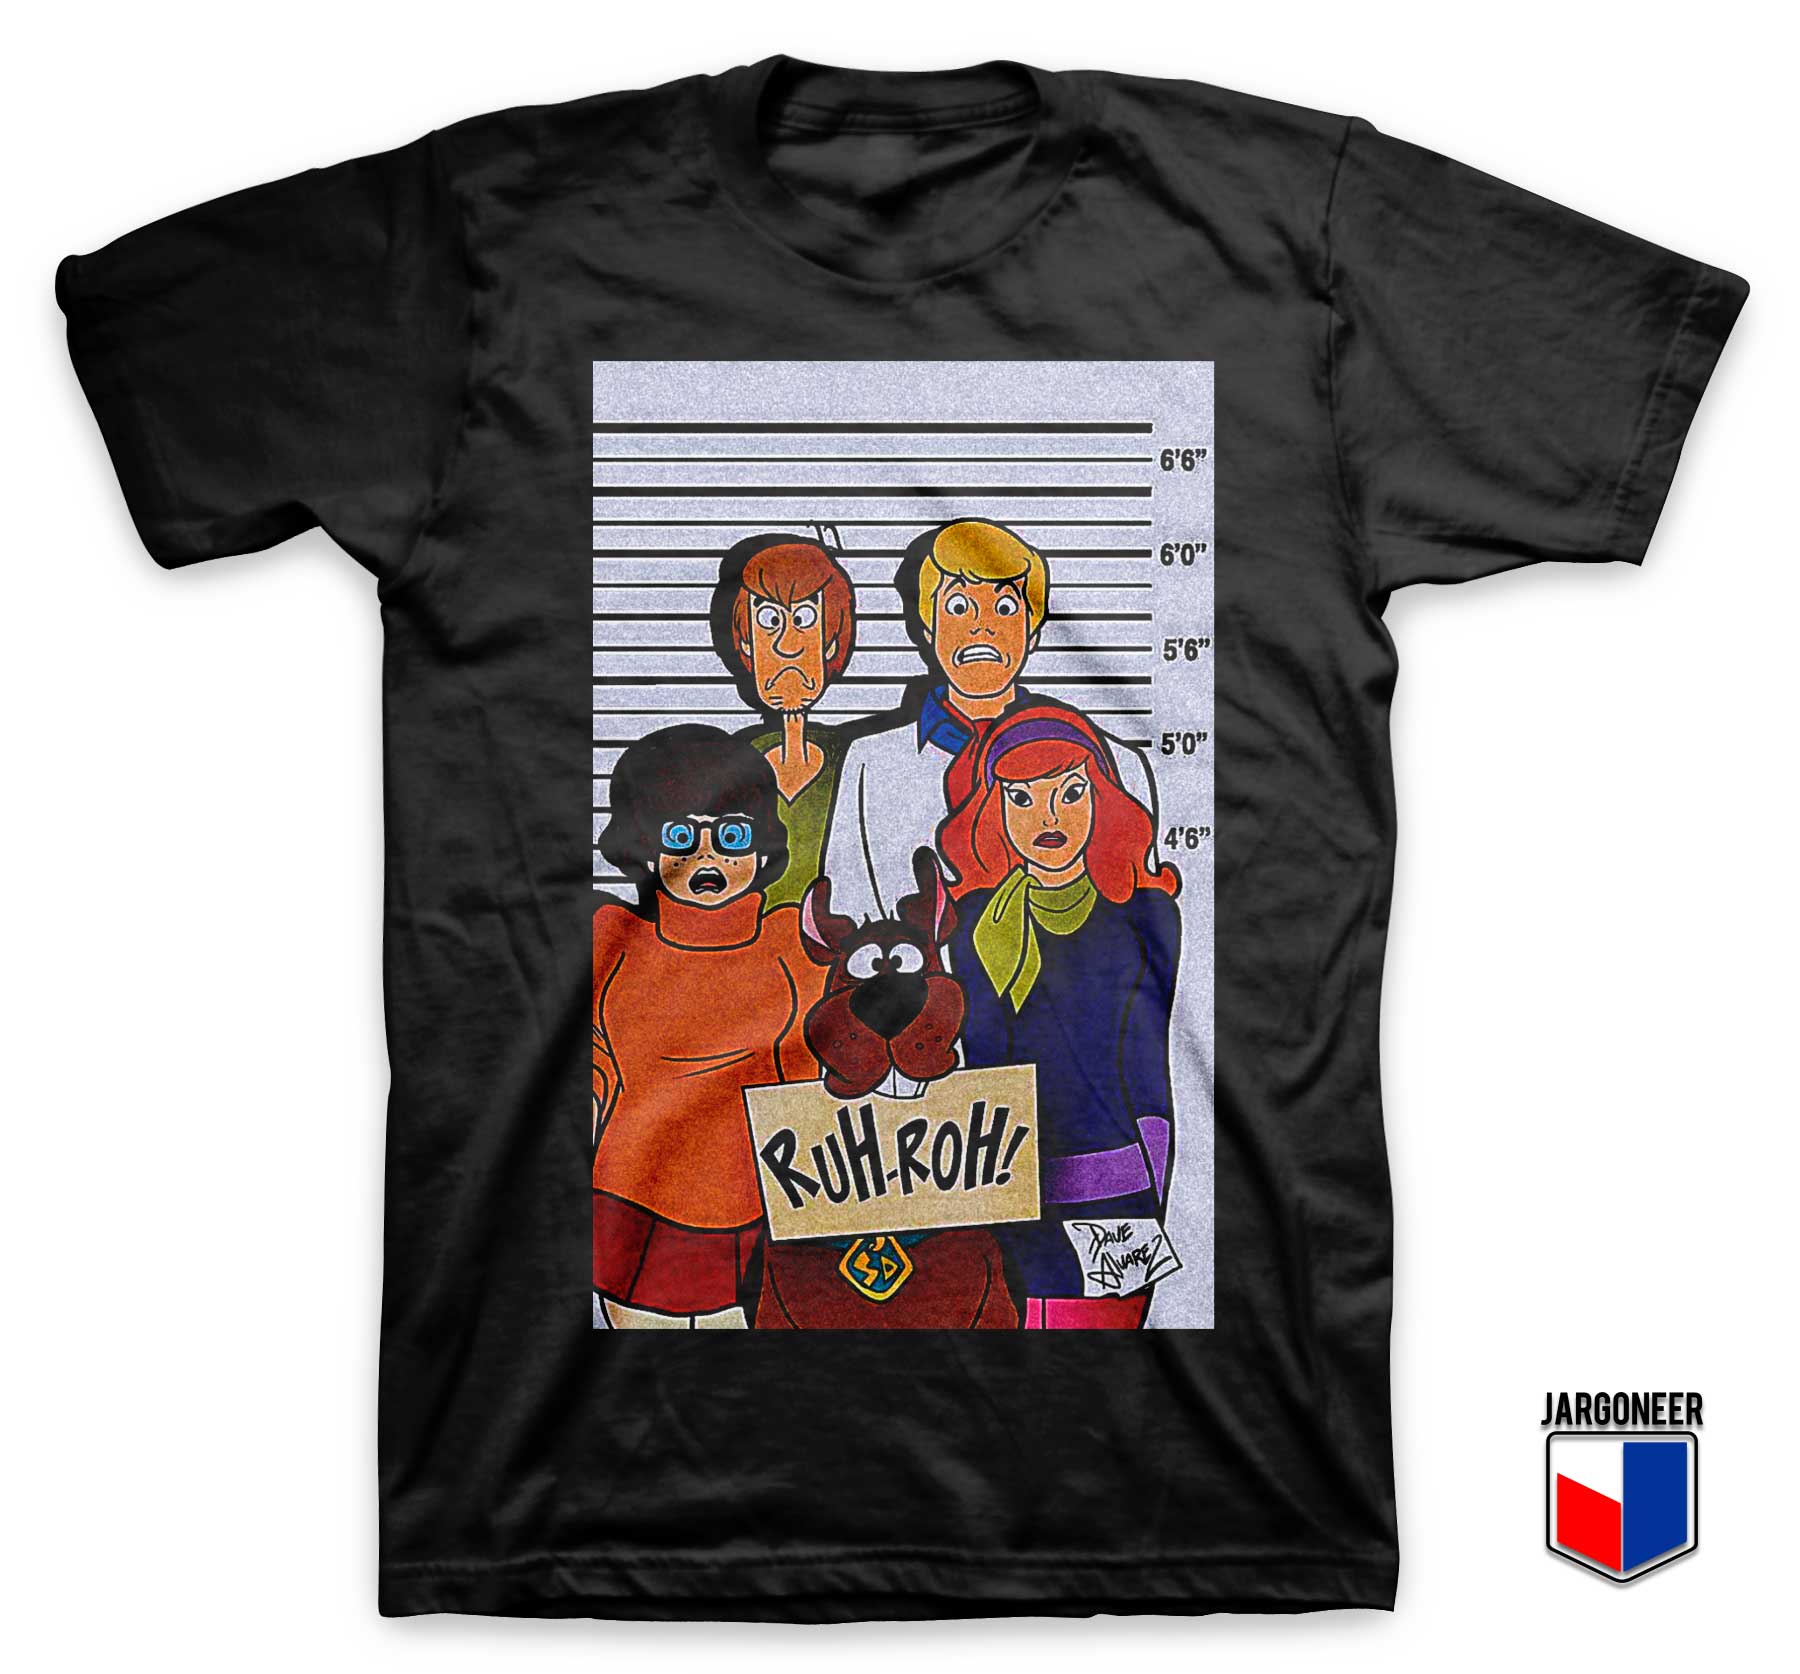 Scooby Doo Top TV Show T Shirt - Shop Unique Graphic Cool Shirt Designs